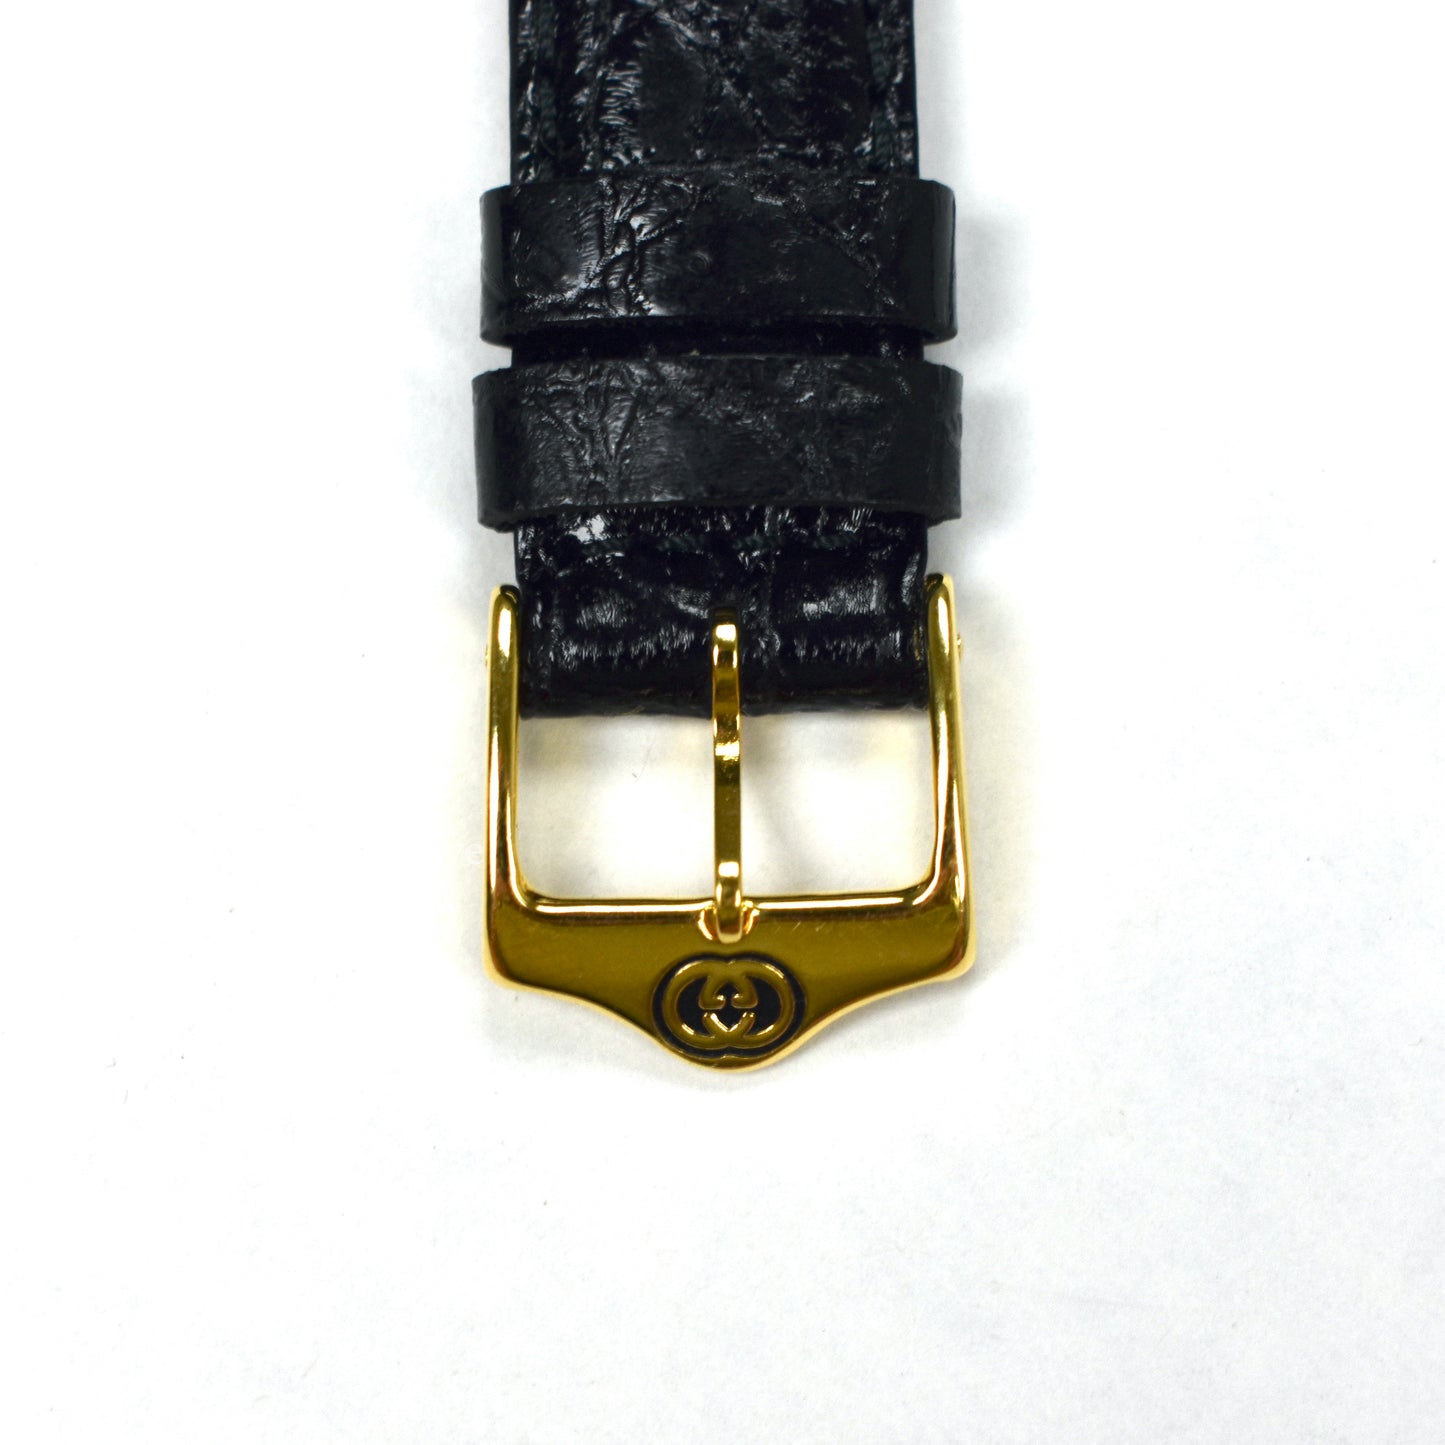 Gucci - 3000M Gold Black GG Dial Watch